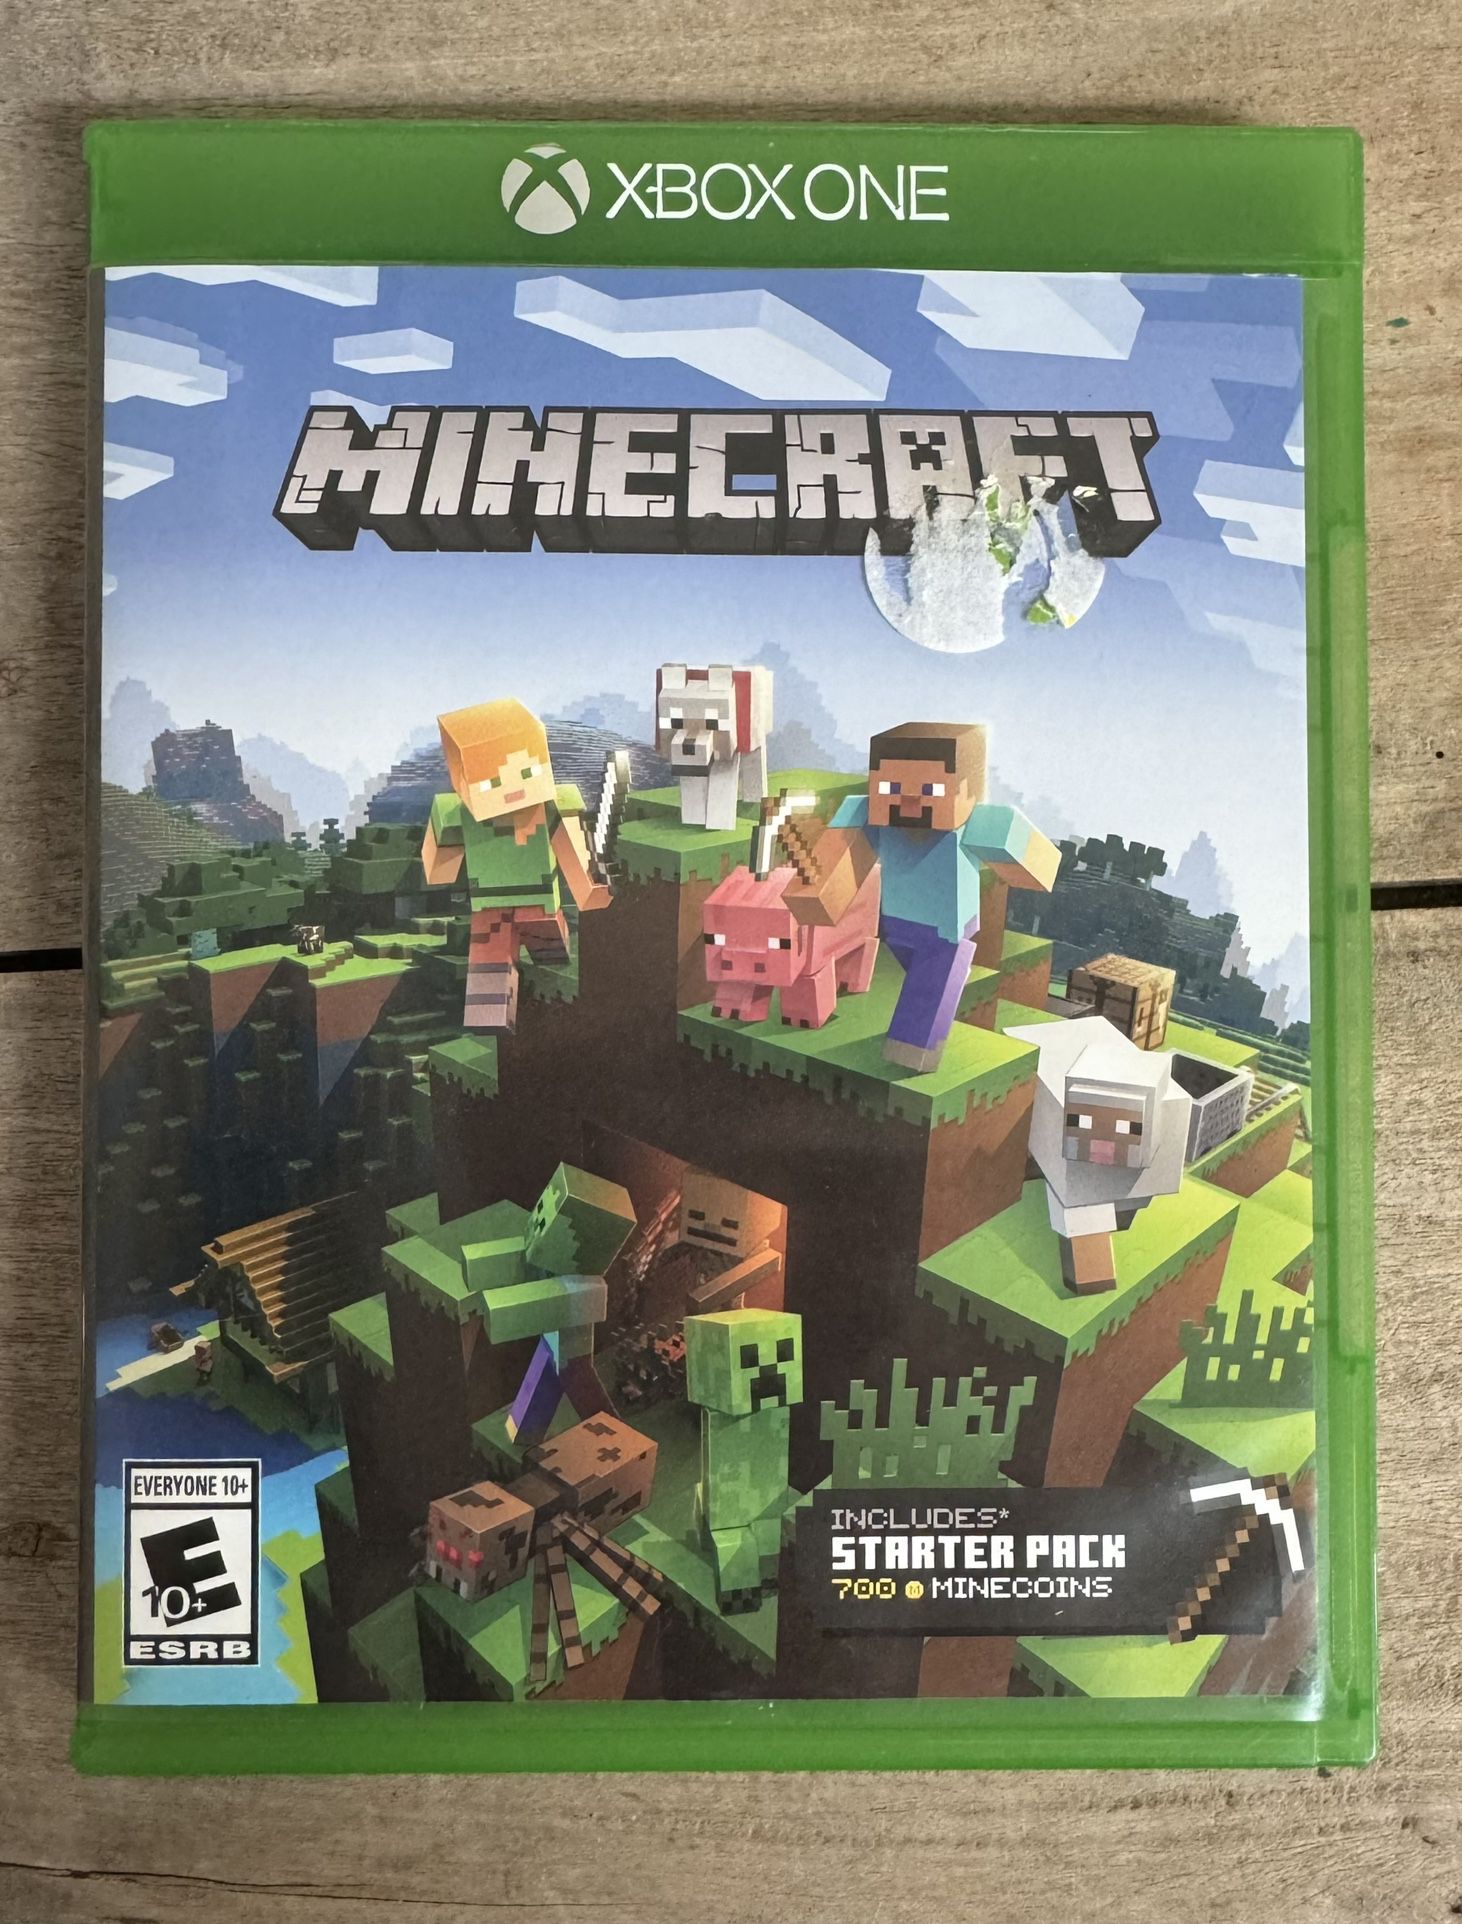 Xbox One Minecraft Game just $15 xox